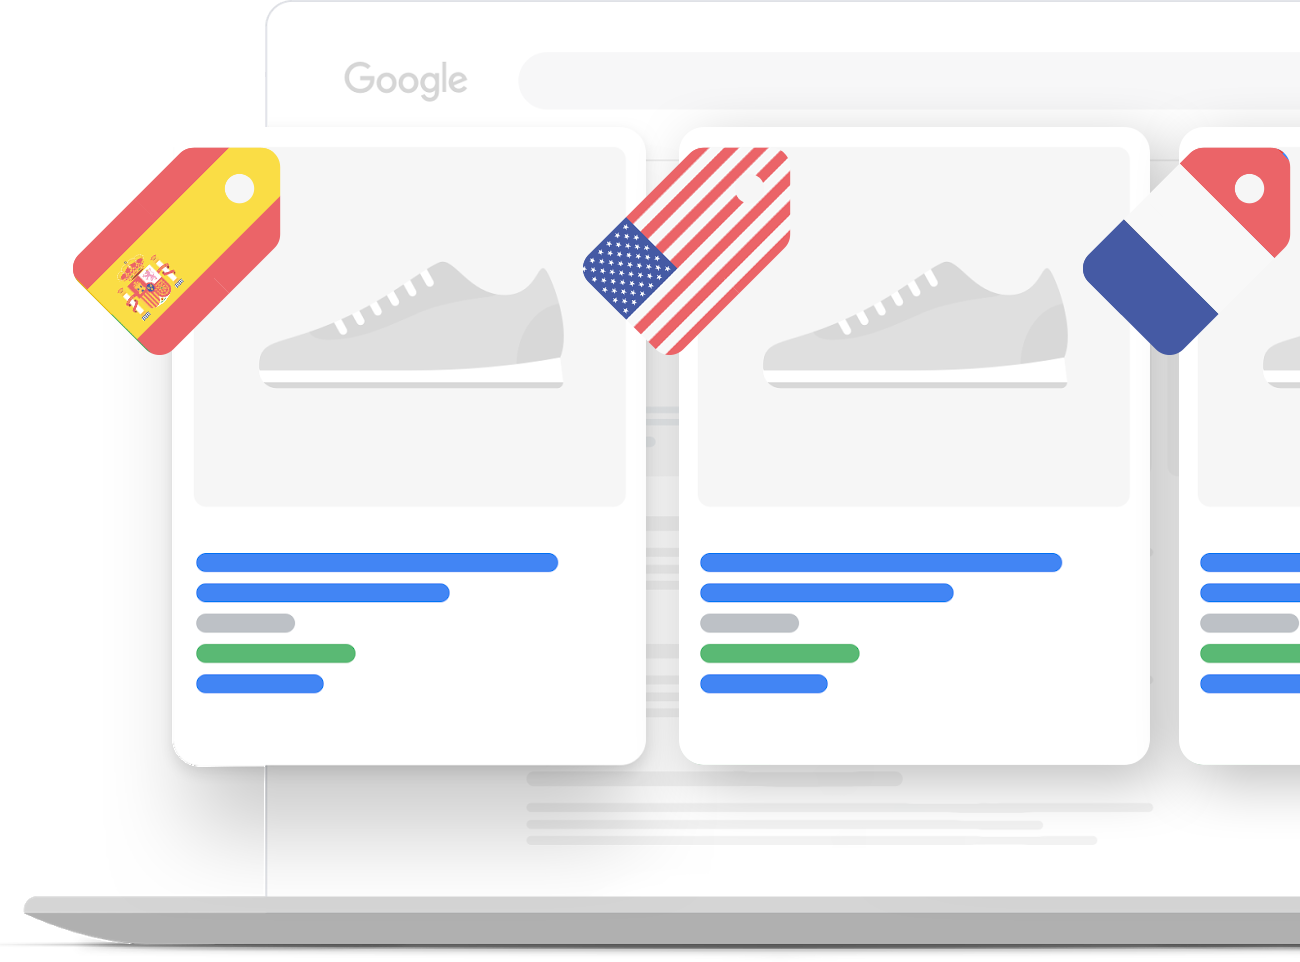 Google Shopping in United States - International Marketing